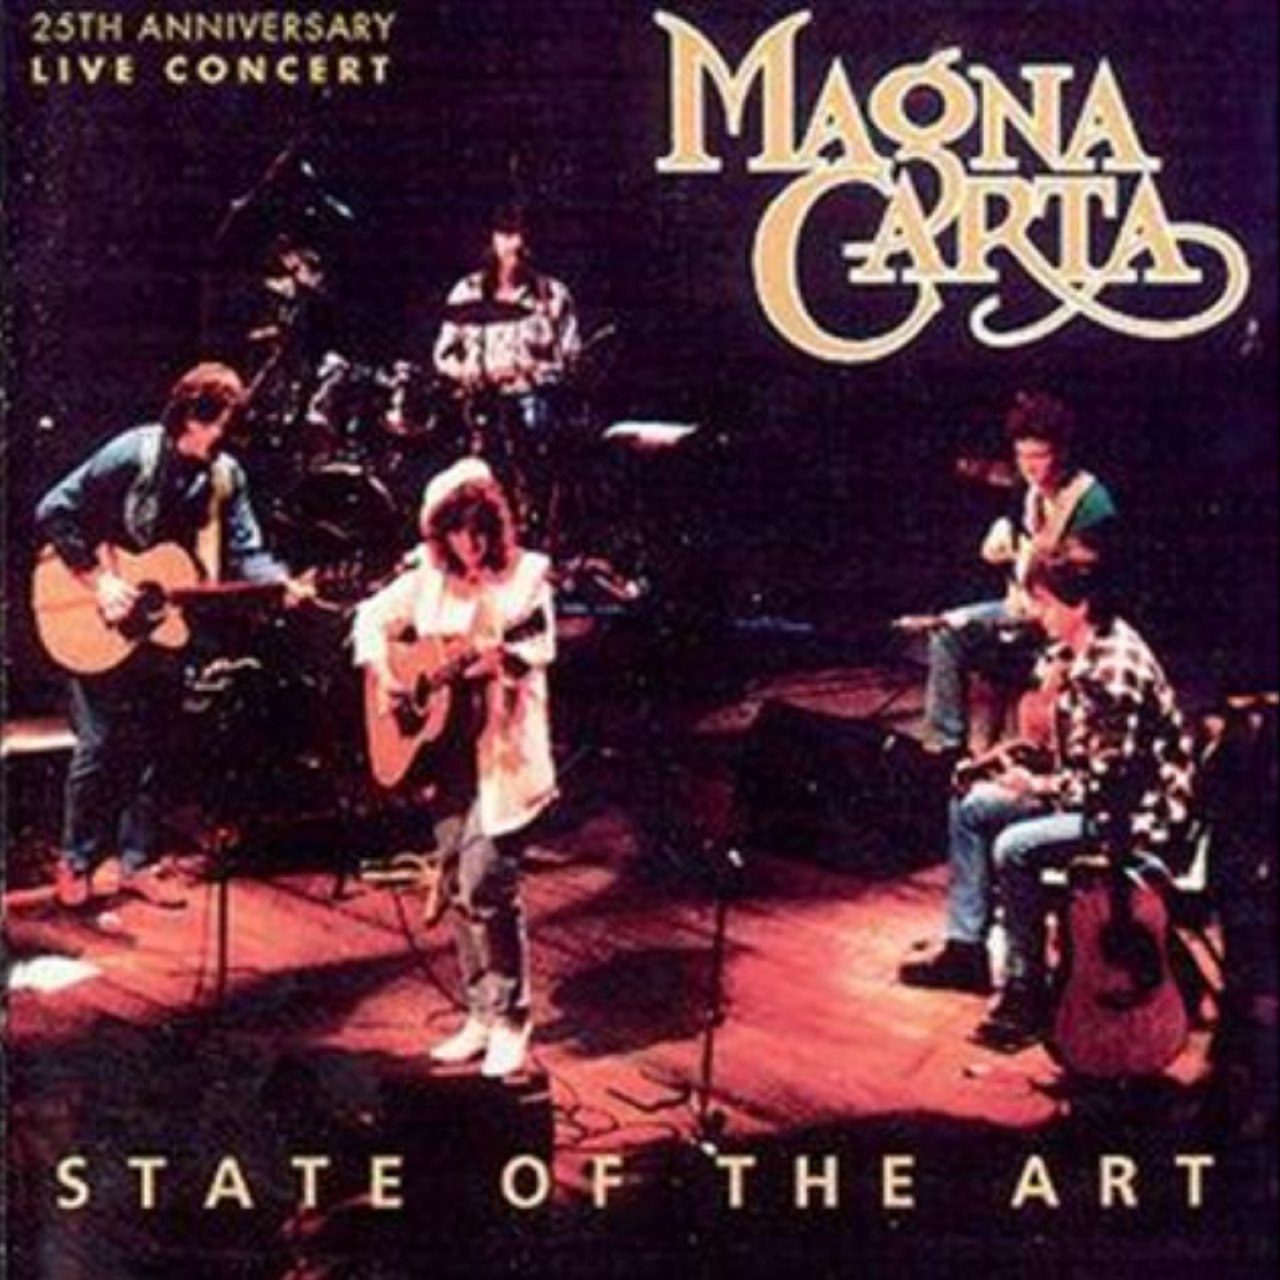 Magna Carta – State Of The Art cover album